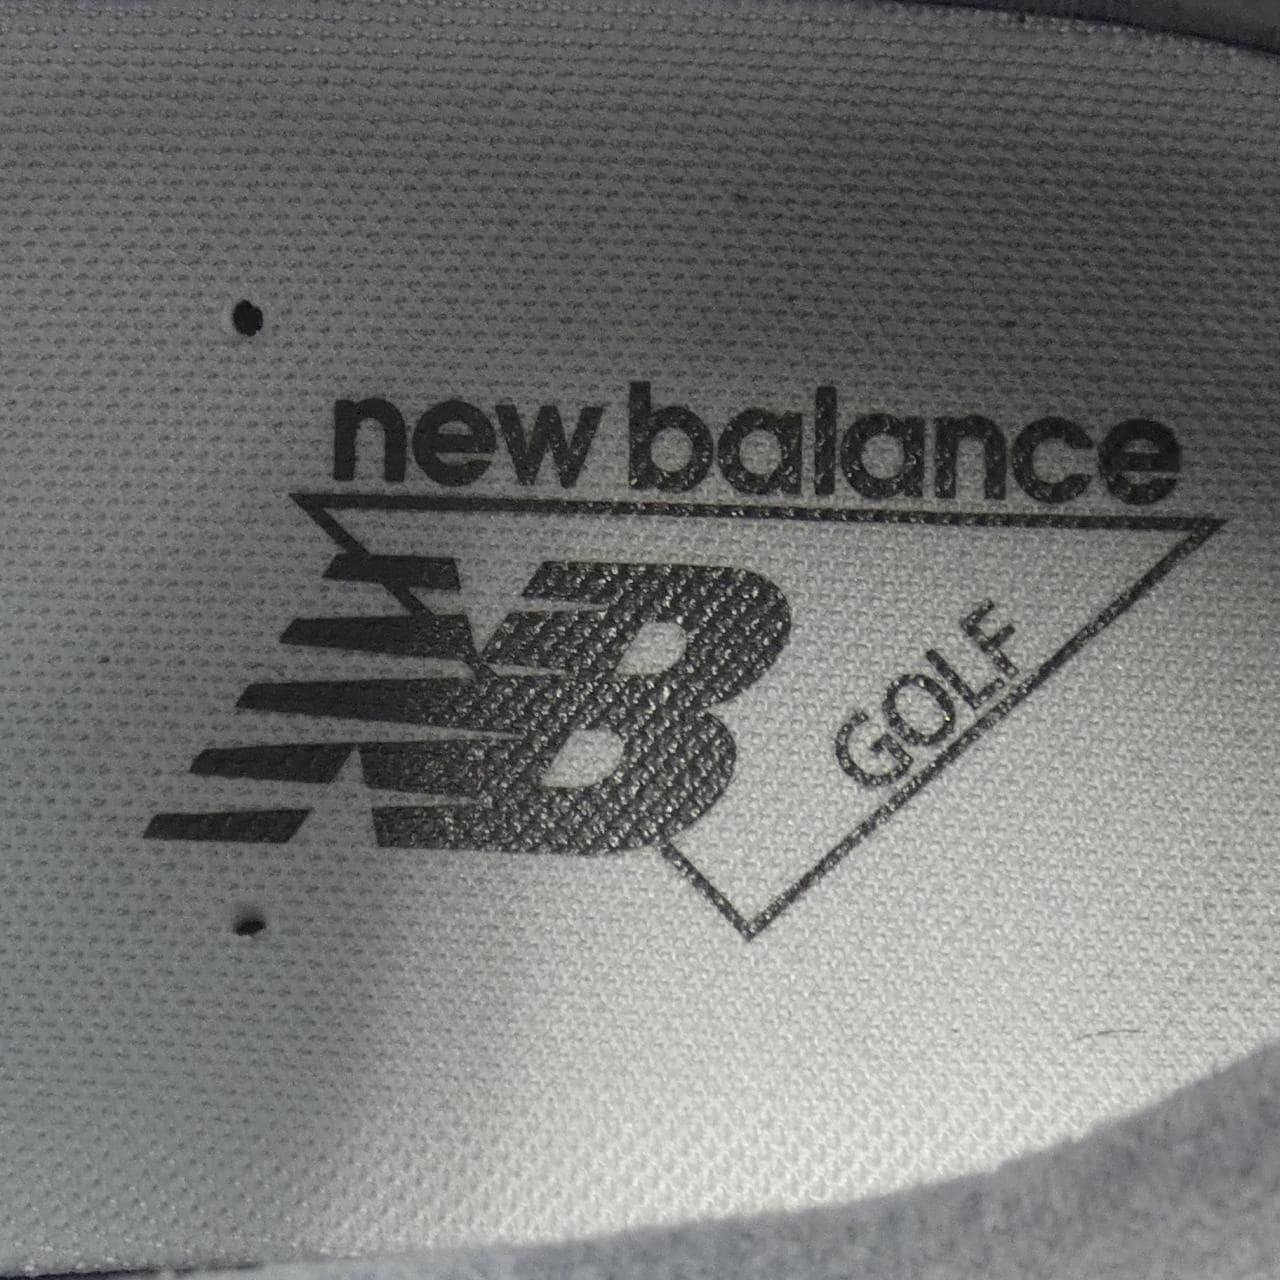 New Balance NEW BALANCE sneakers